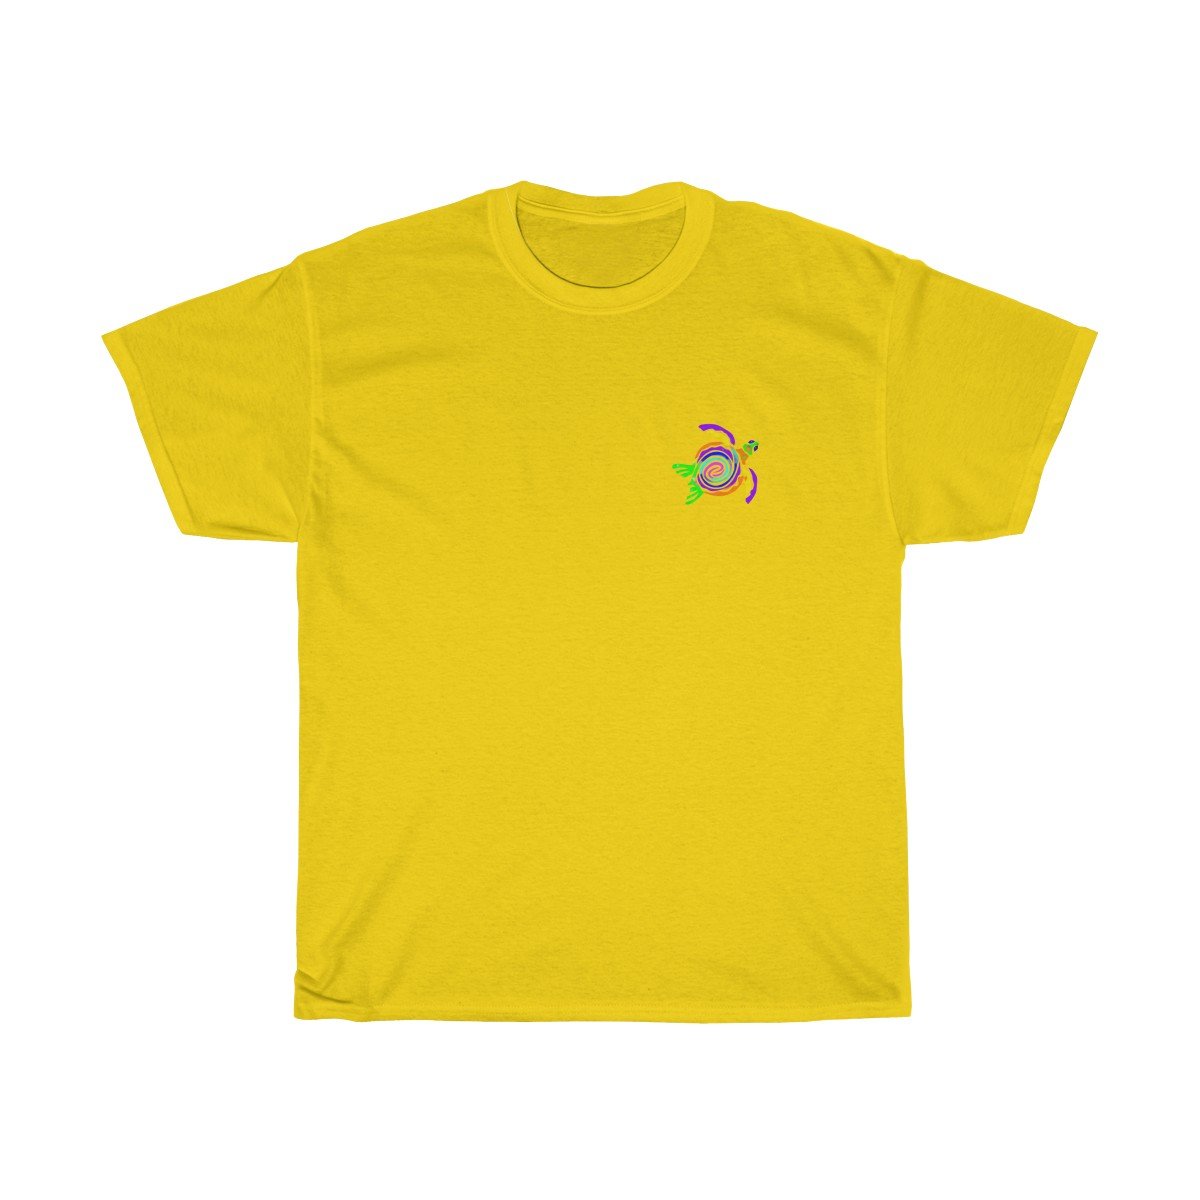 Save the Ocean Unisex Short Sleeve Sea Turtle T-Shirt - Captain Woody's Beach Club